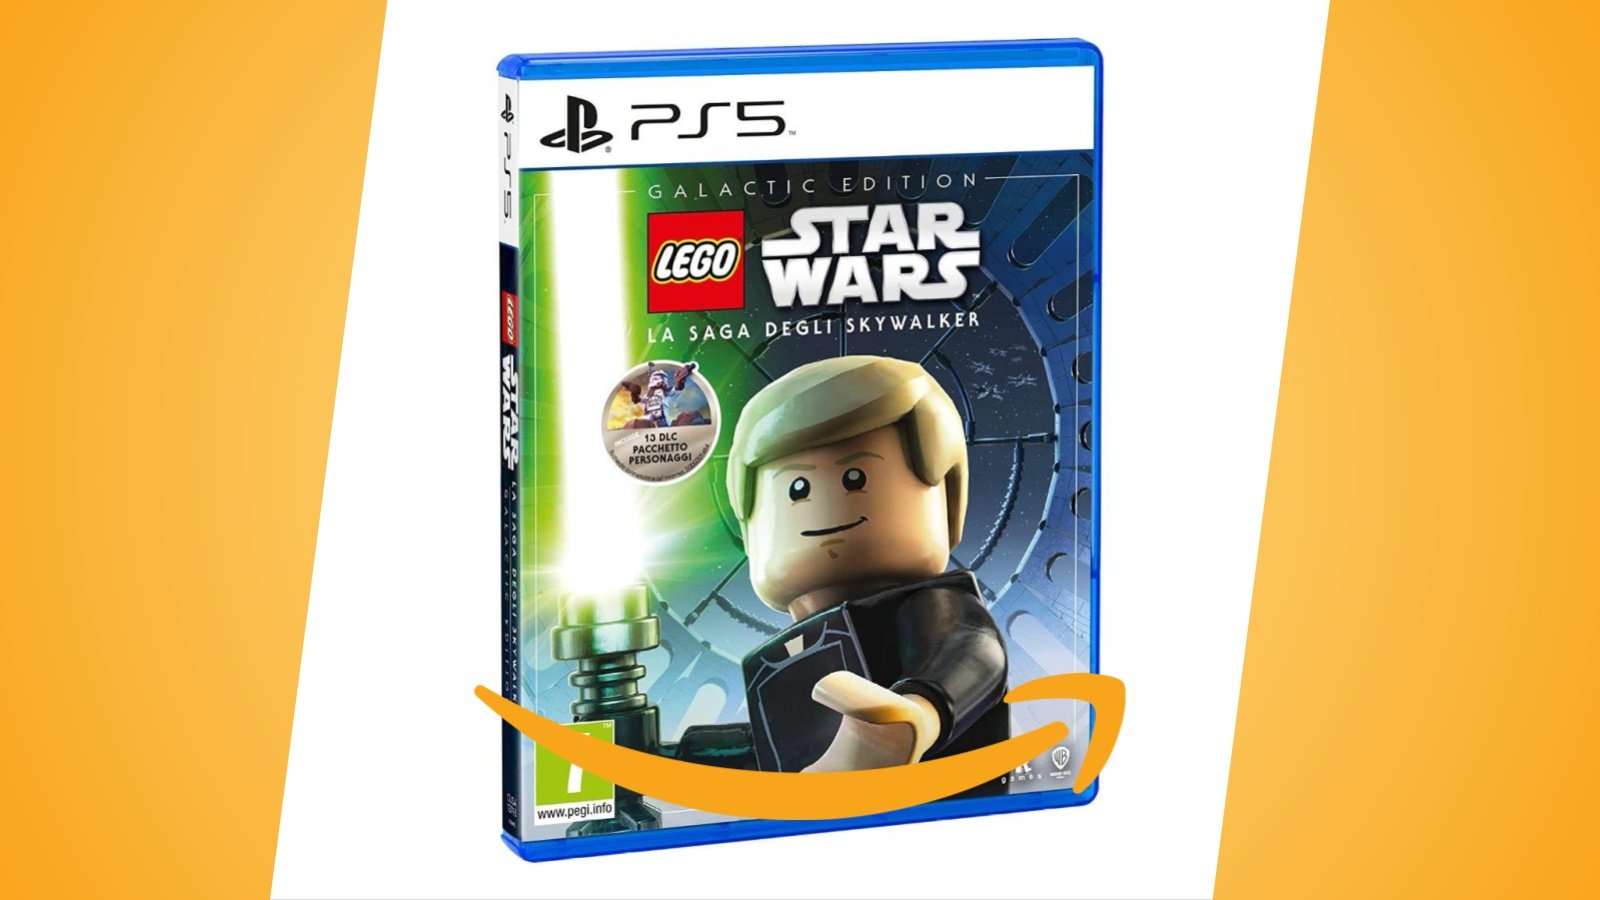 Offerte Amazon: LEGO Star Wars La Saga degli Skywalker Galactic Edition per PS5 in fortissimo sconto